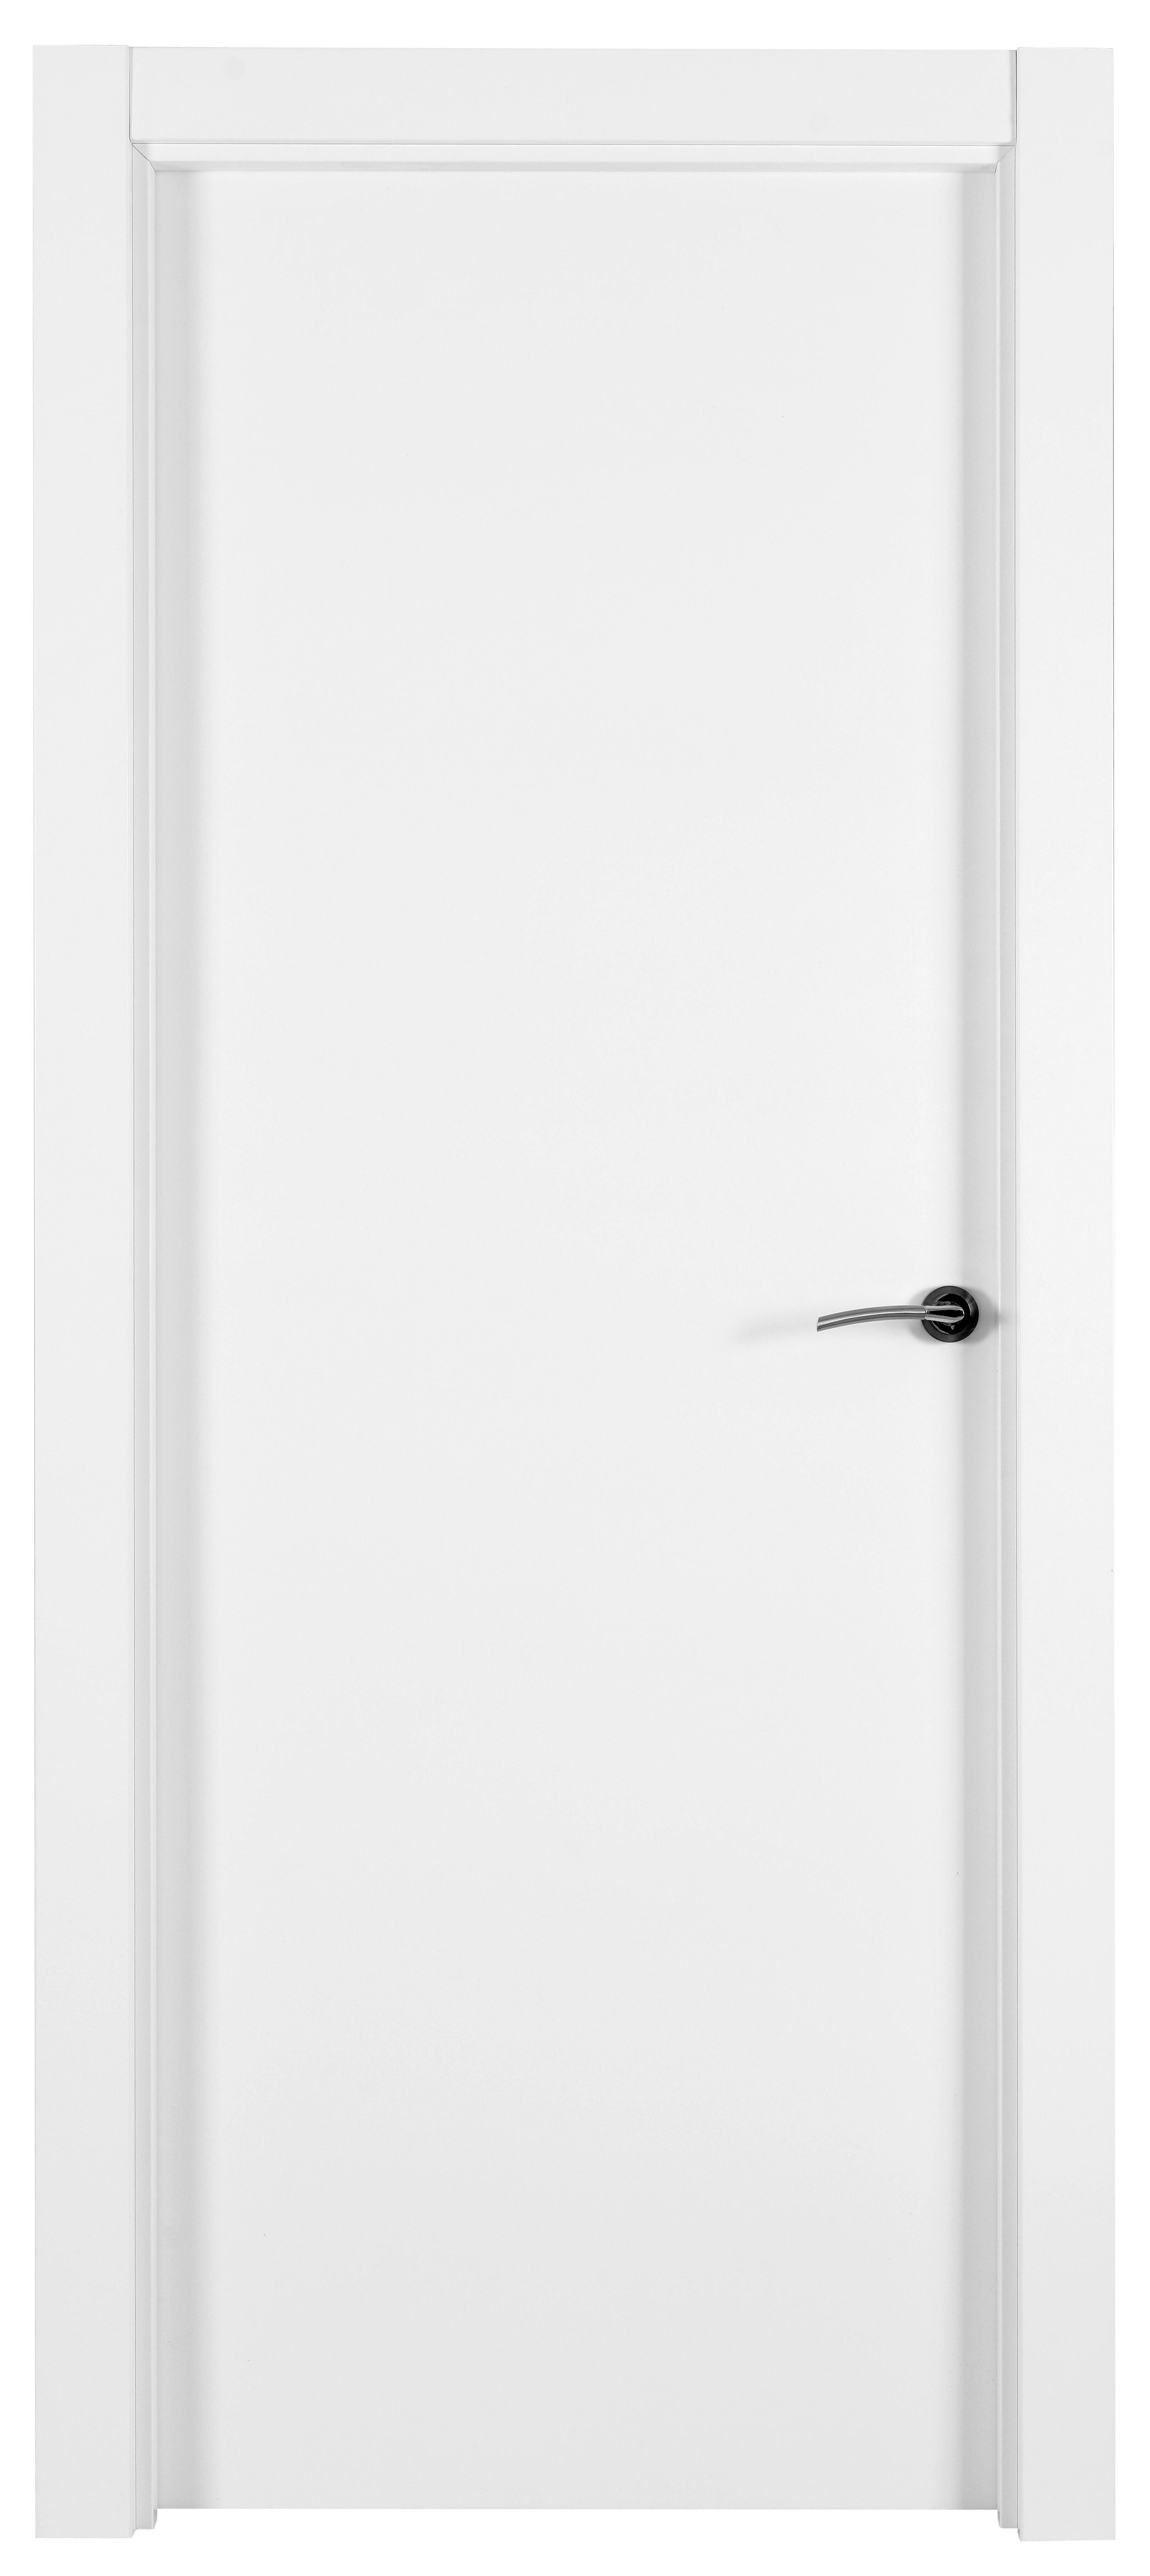 Puerta lyon blanco apertura izquierda 62.5cm